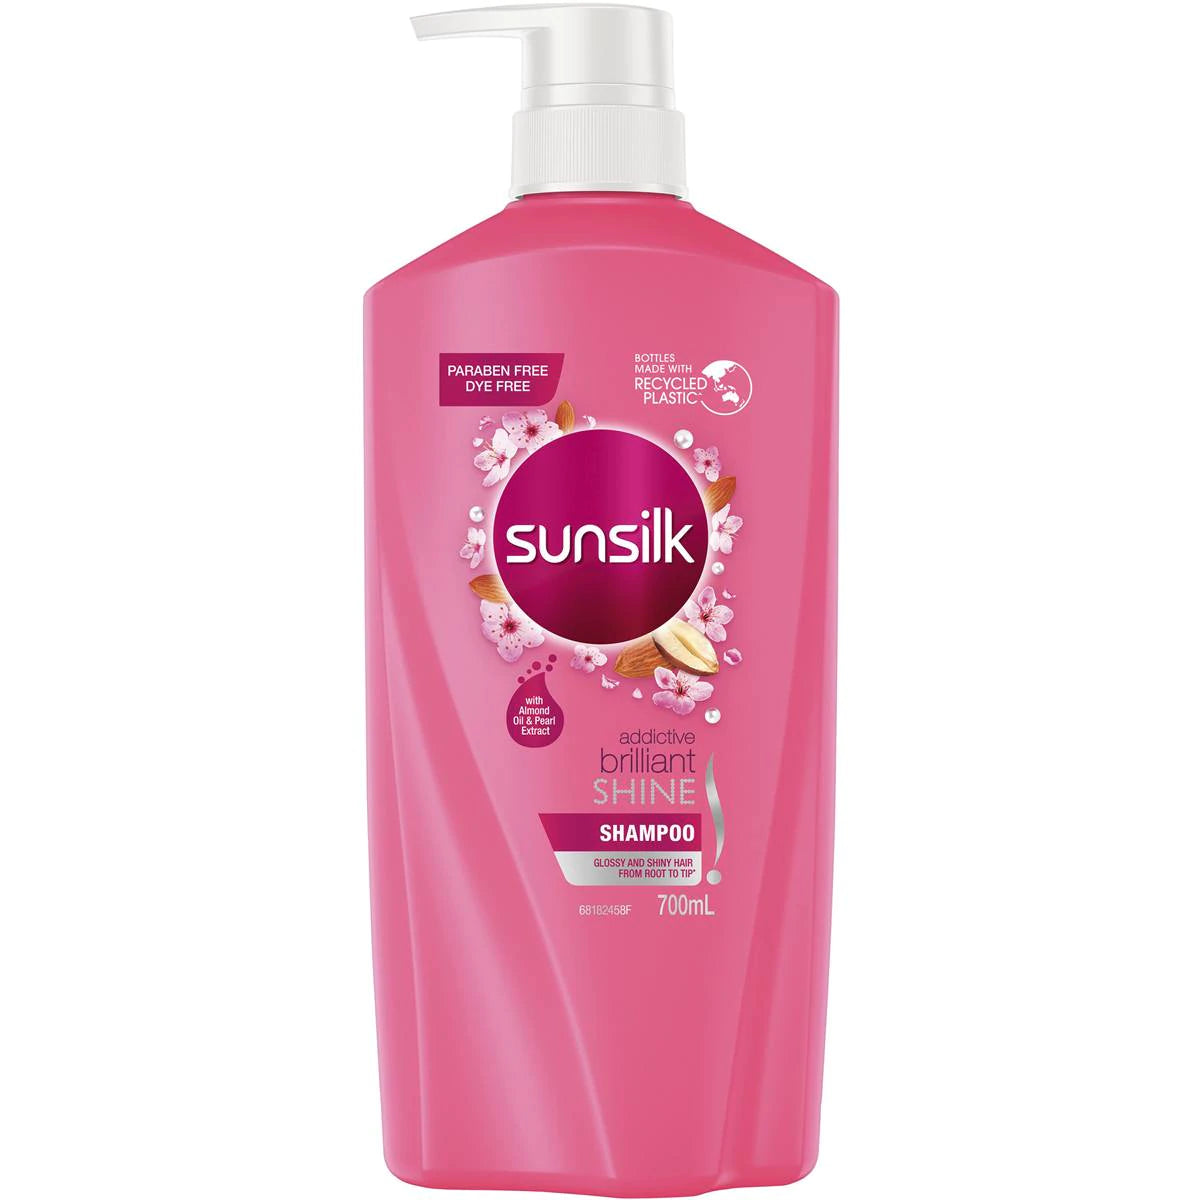 Sunsilk Brilliant Shine Shampoo 700mL